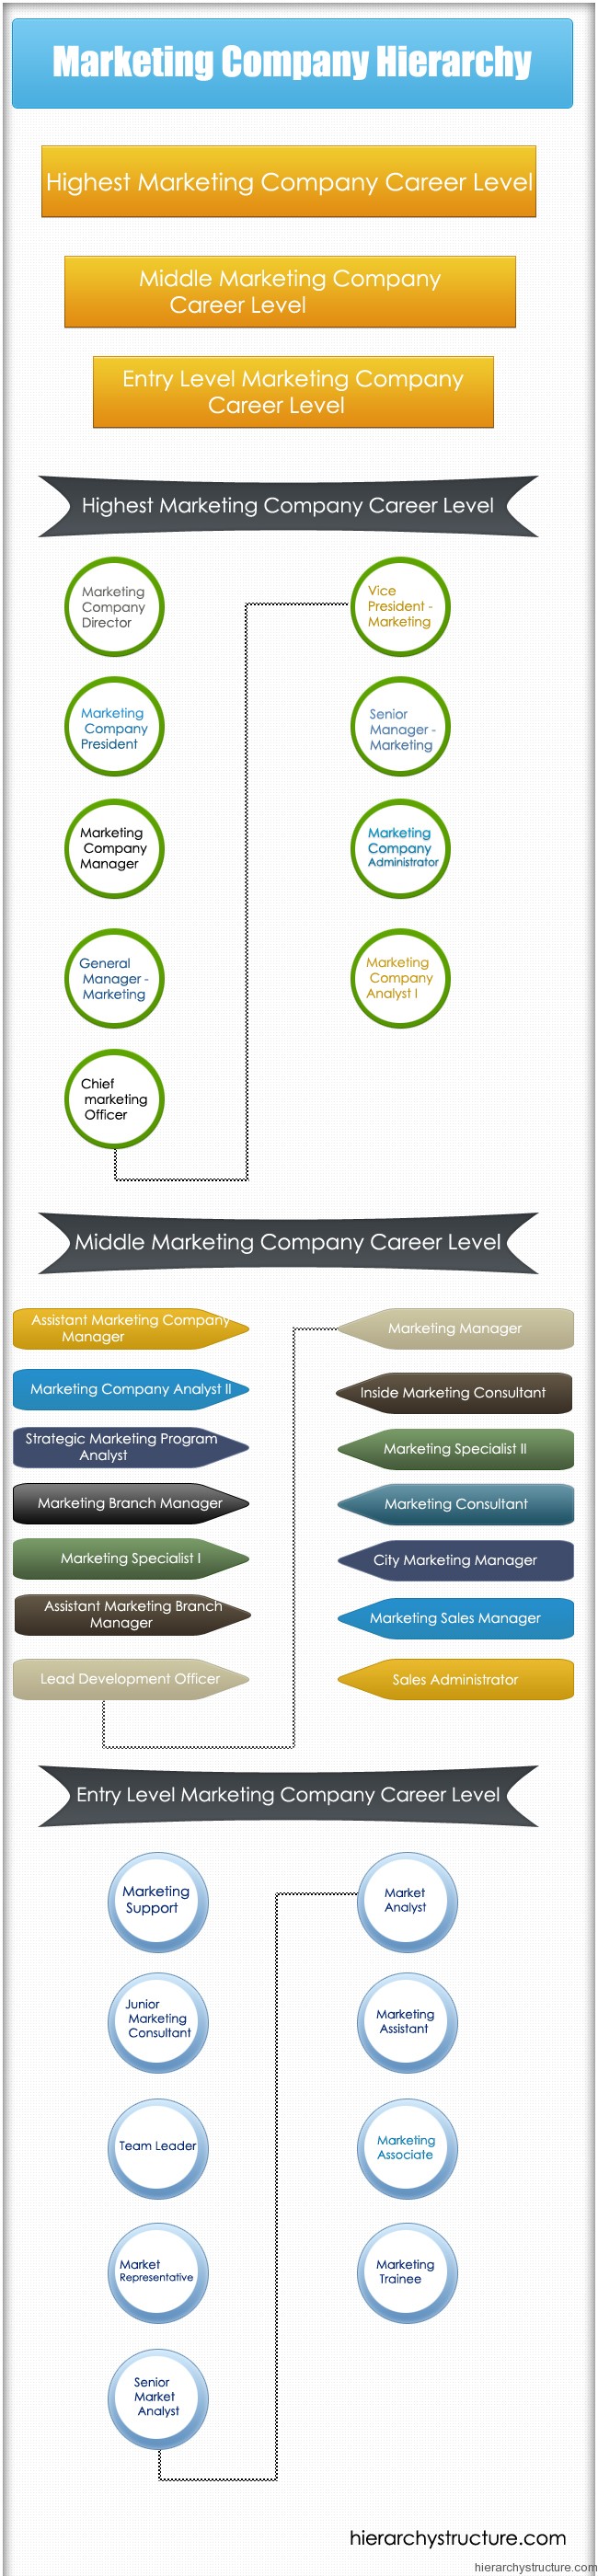 Marketing Company Hierarchy